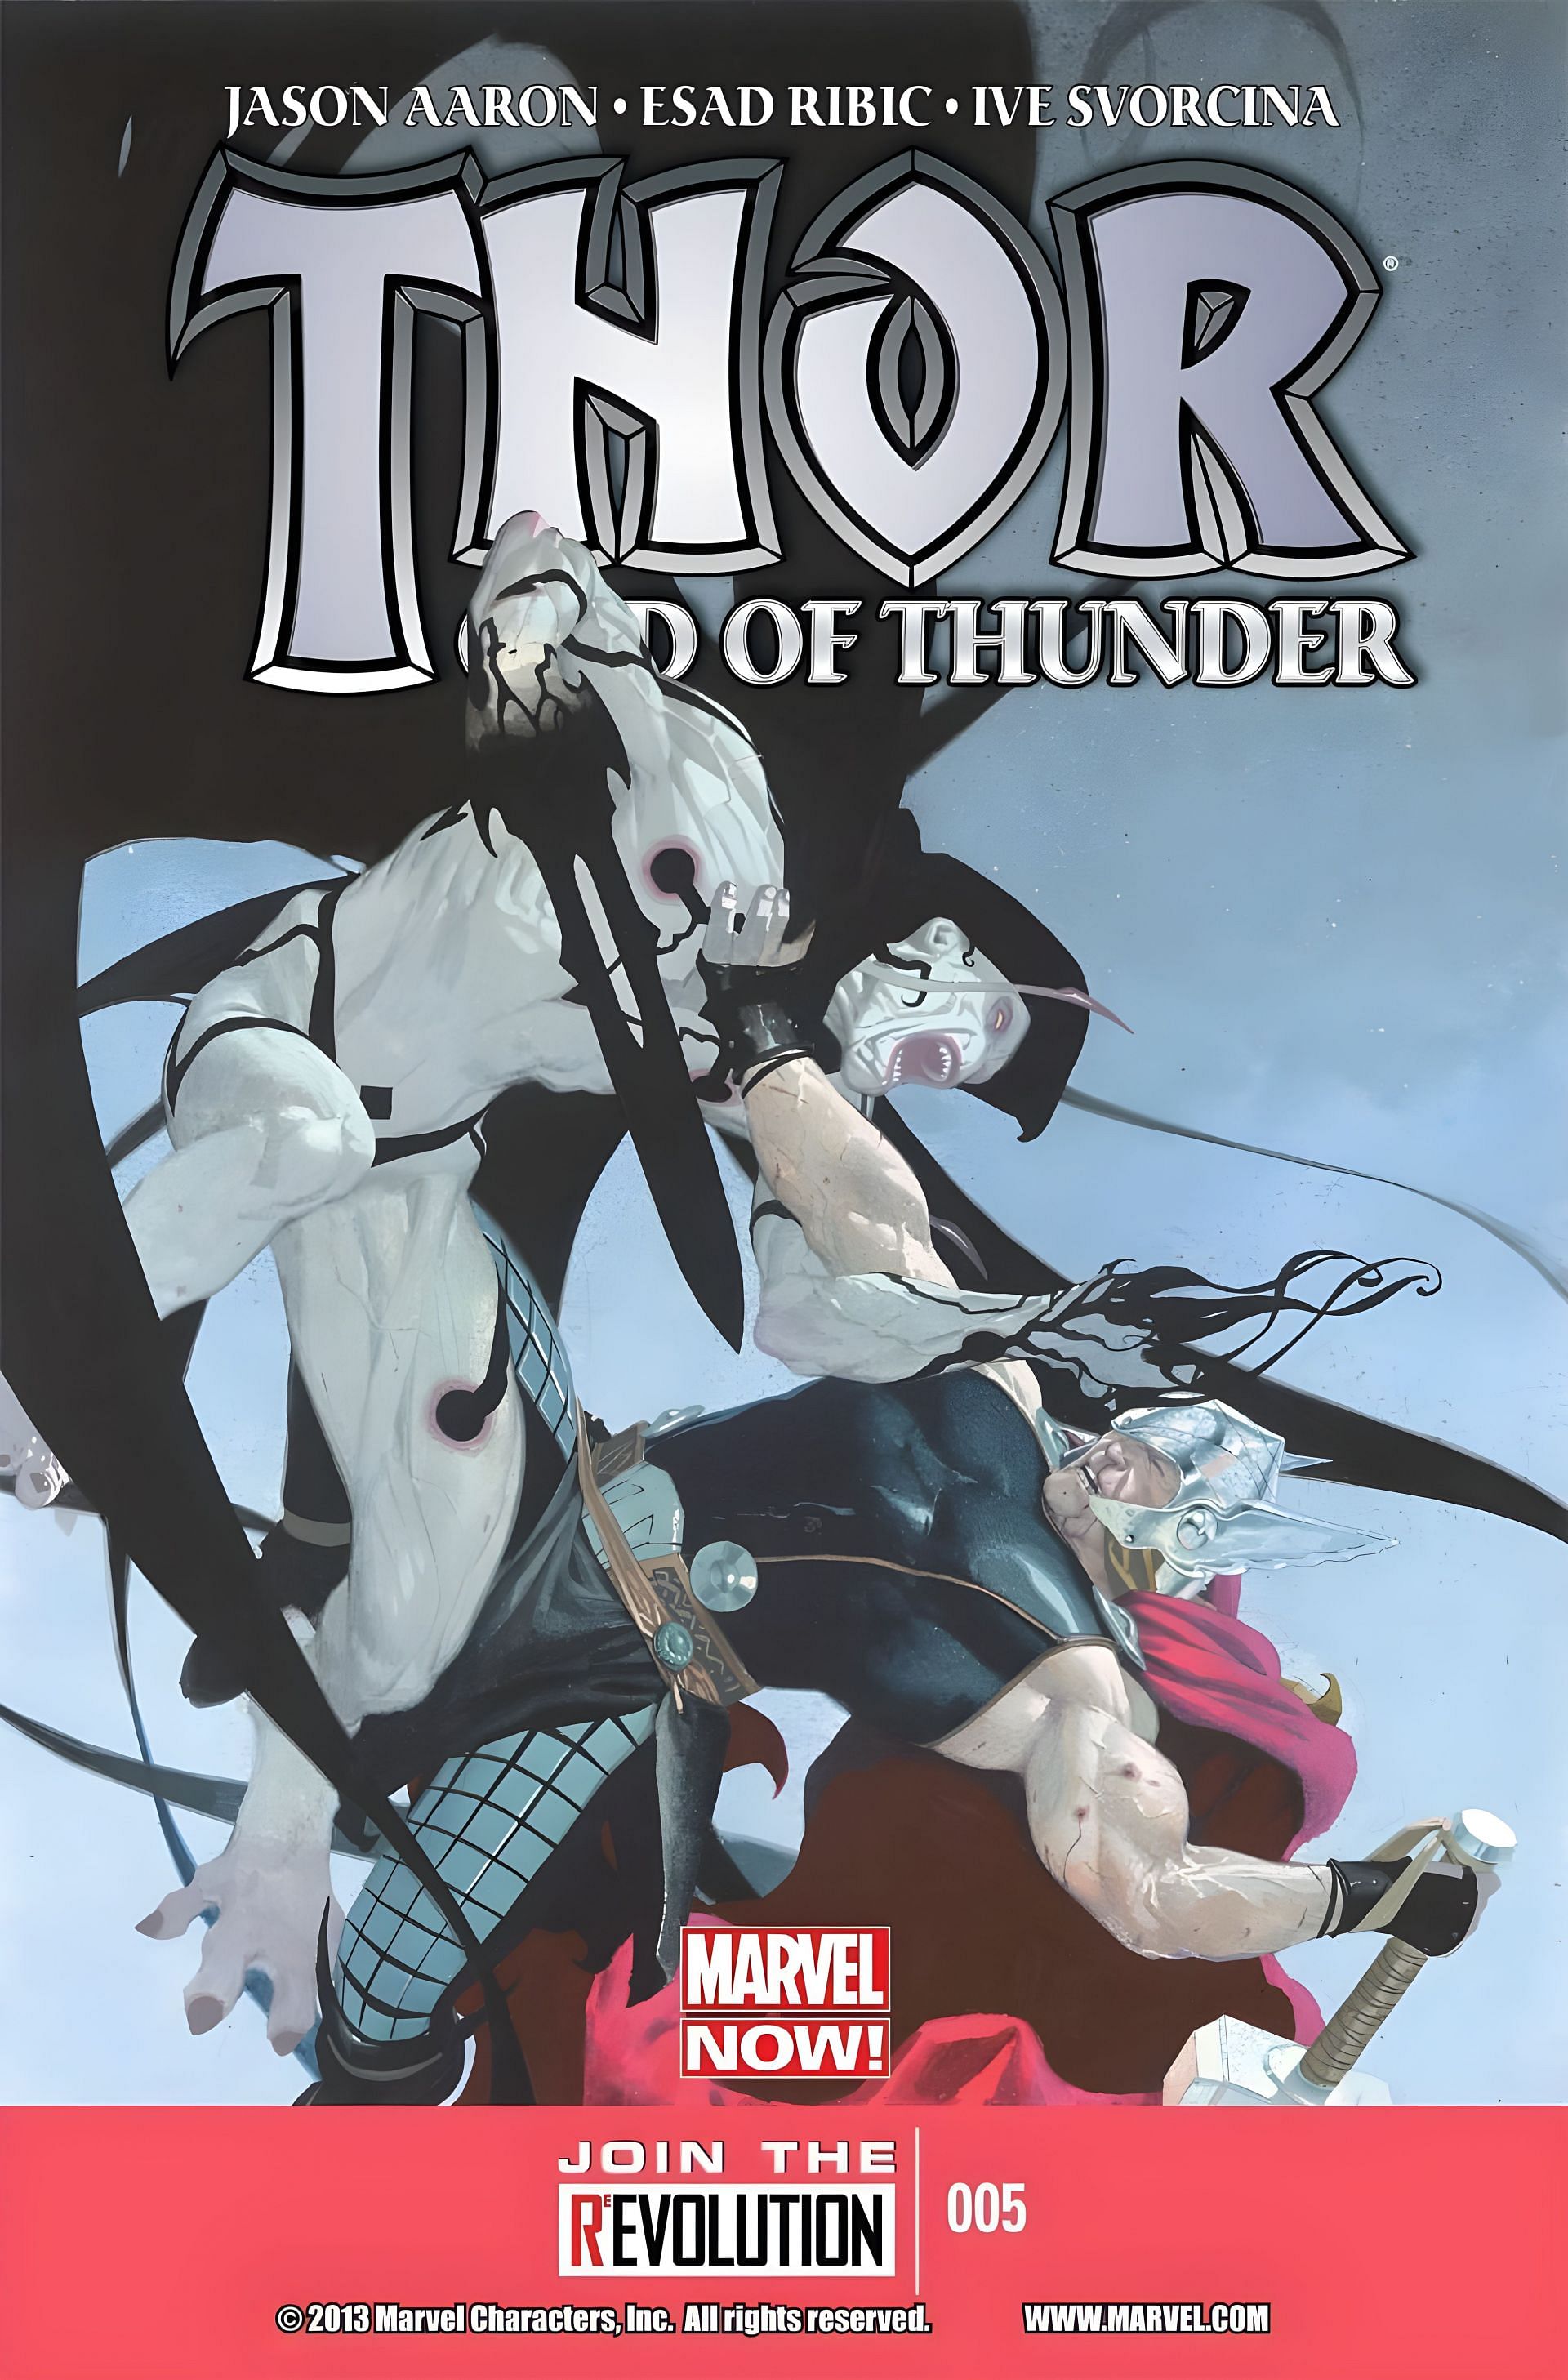 Thor: God of Thunder #5 cover (Image via Marvel Comics)